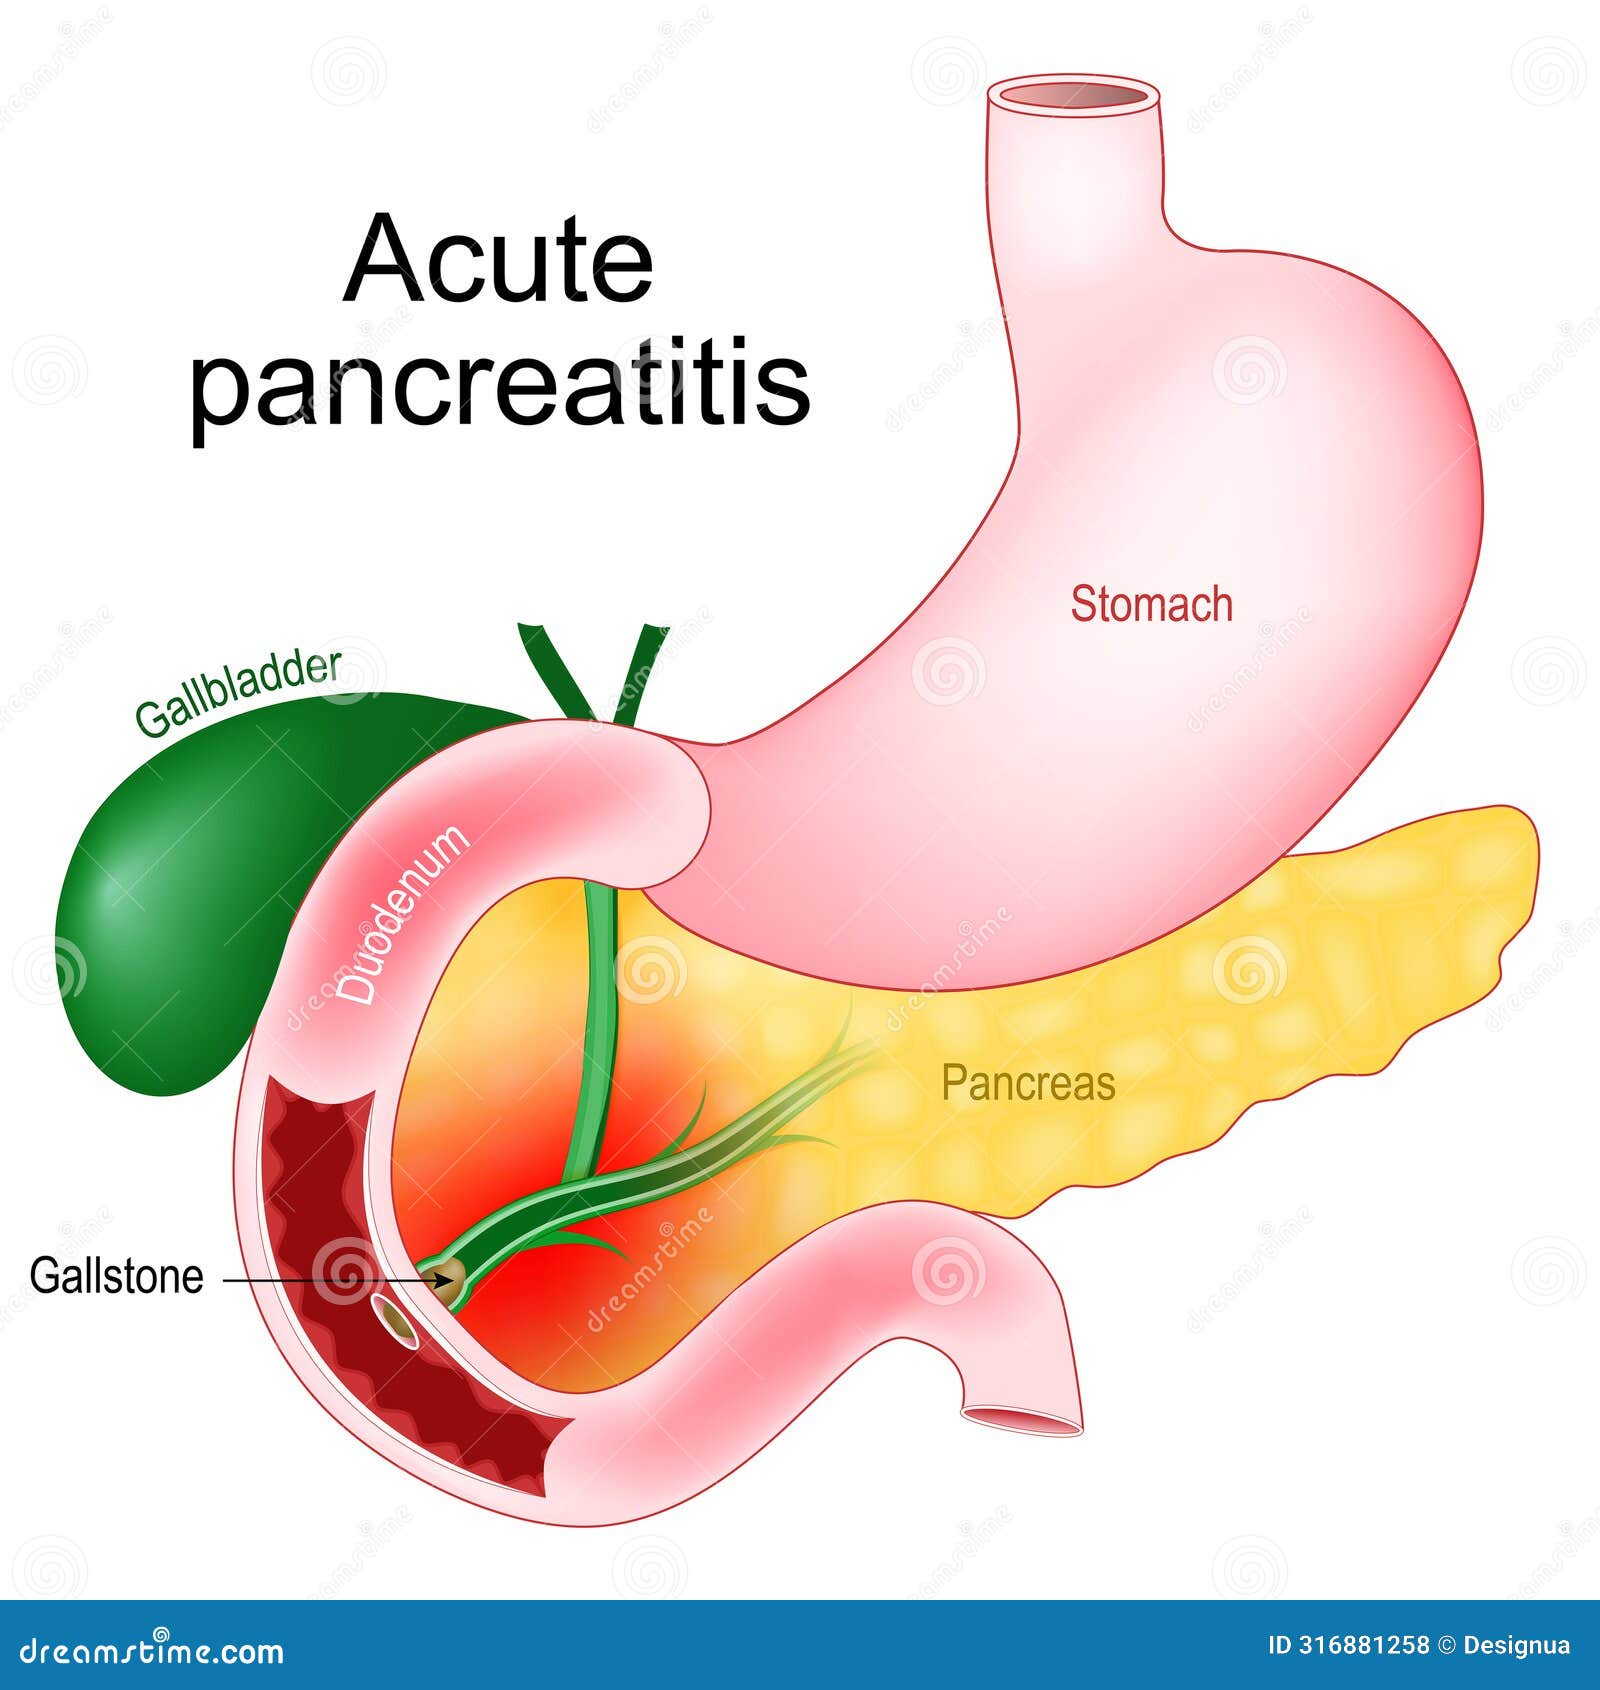 acute pancreatitis. pancreas inflammation